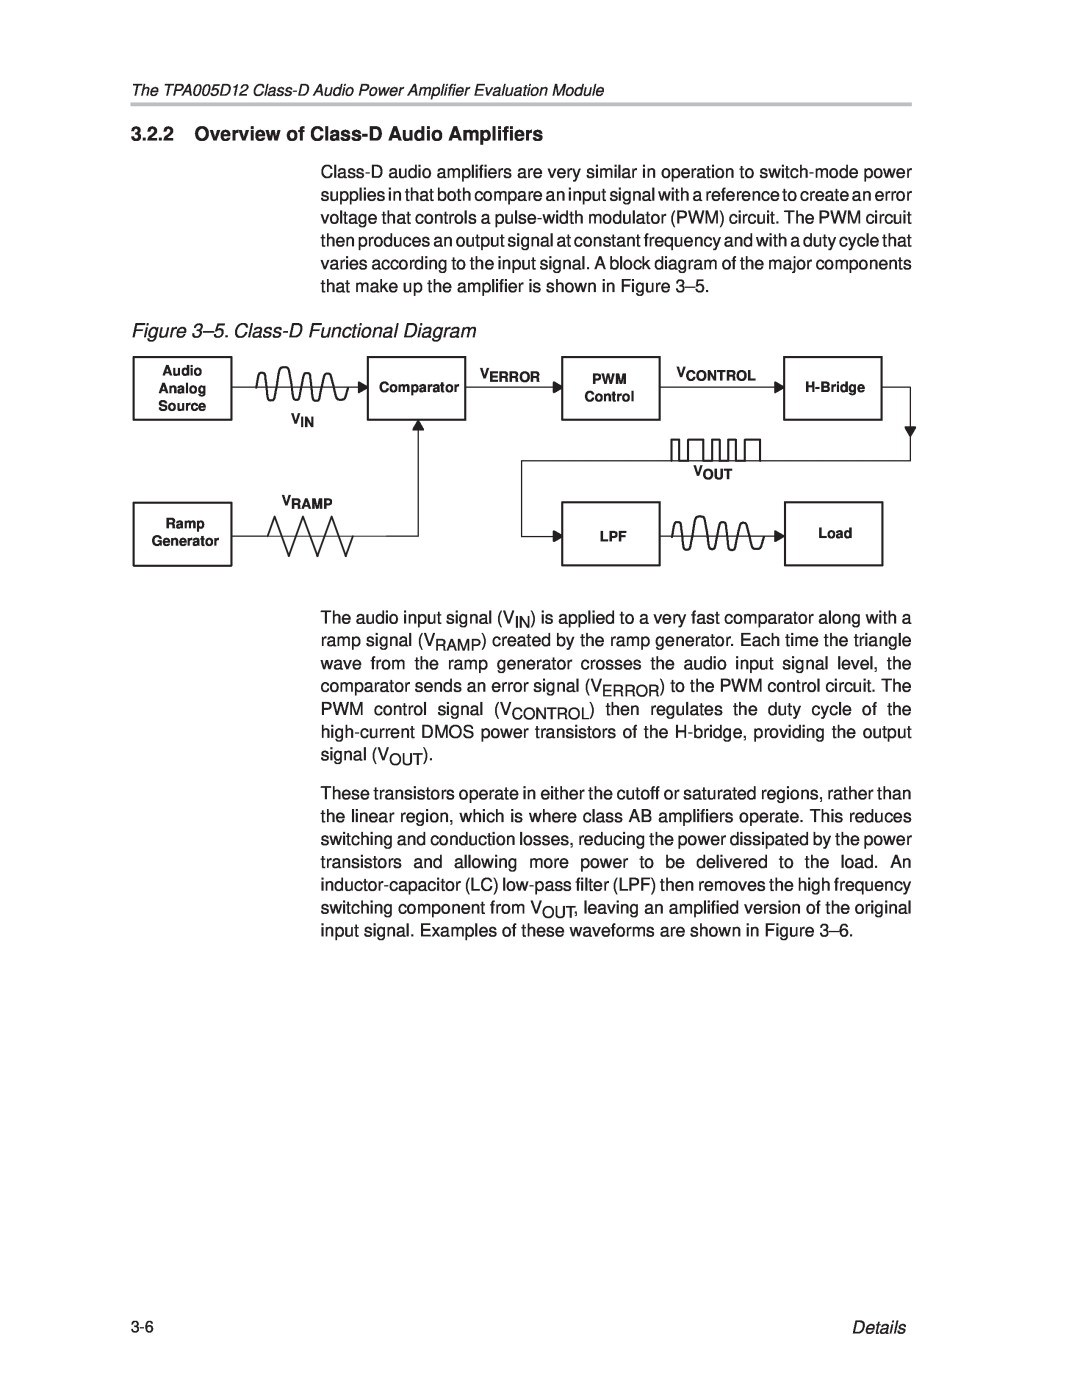 Texas Instruments TPA005D12 manual 3.2.2Overview of Class-DAudio Amplifiers, ±5. Class-DFunctional Diagram, Details 